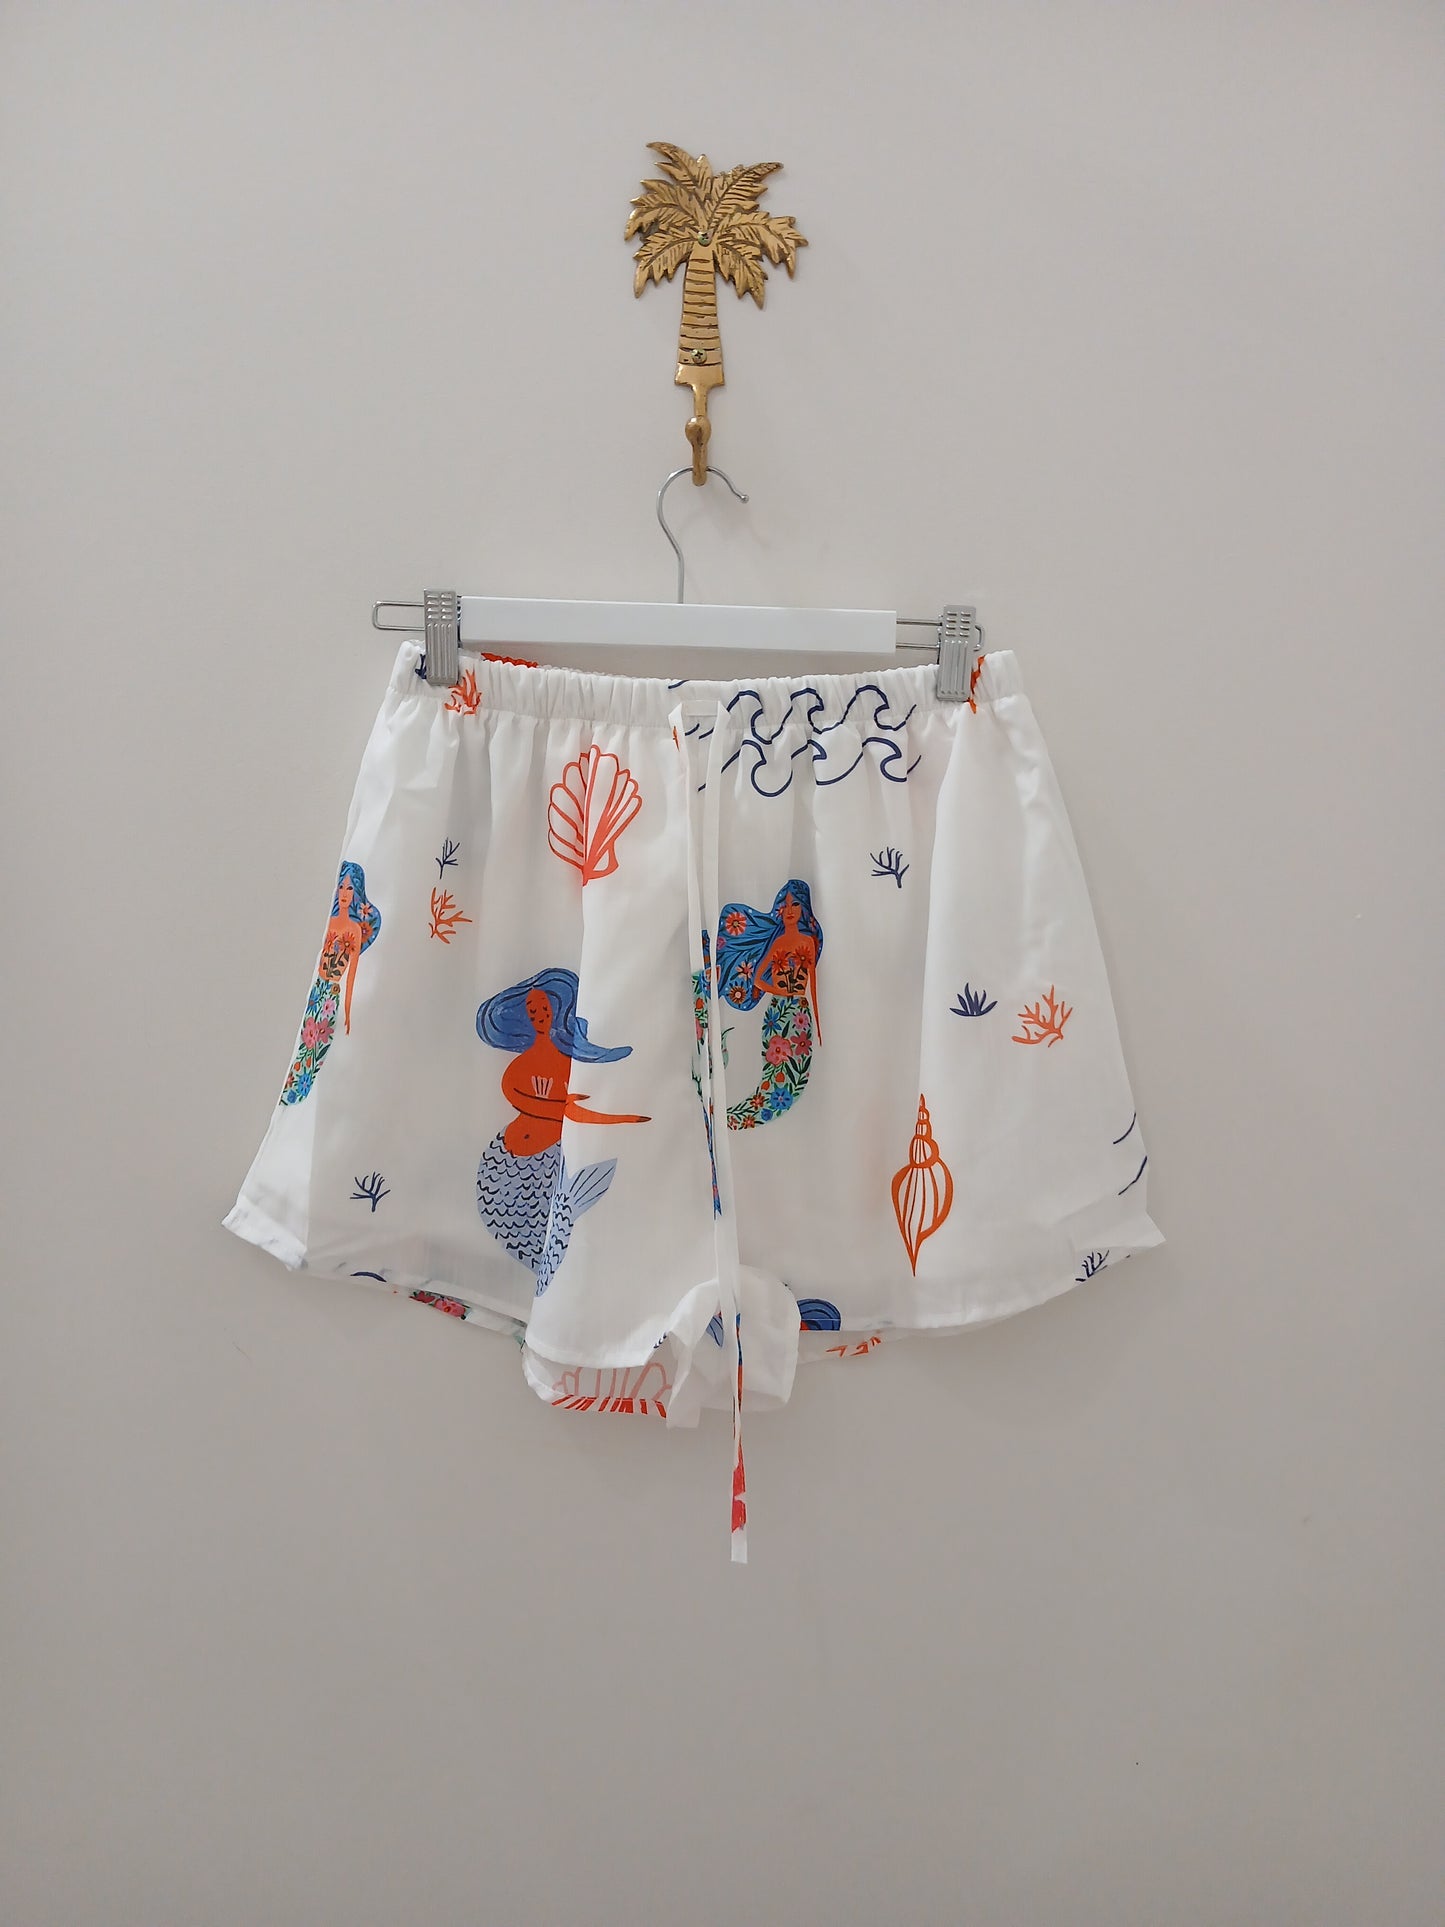 By Frankie - Button Up Shirt & Shorts Set - Mermaid Print